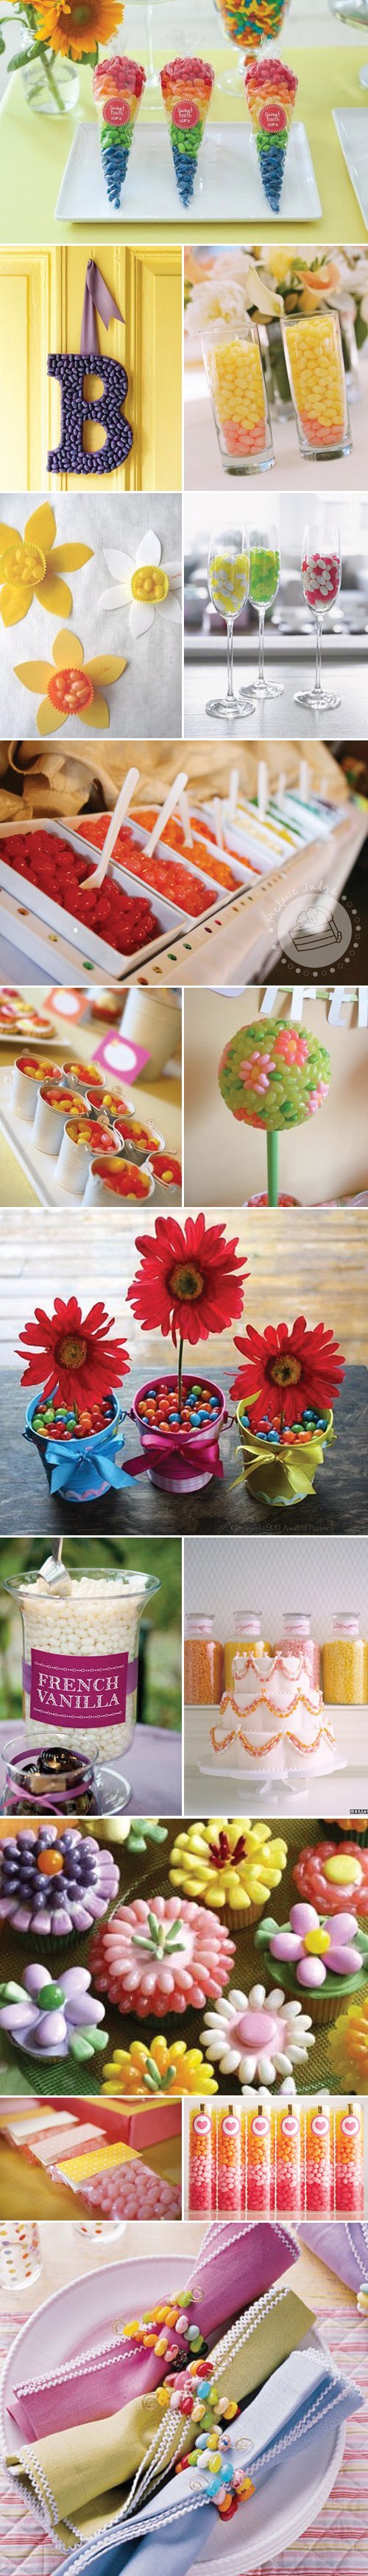 Jellybean Party Ideas, Easter